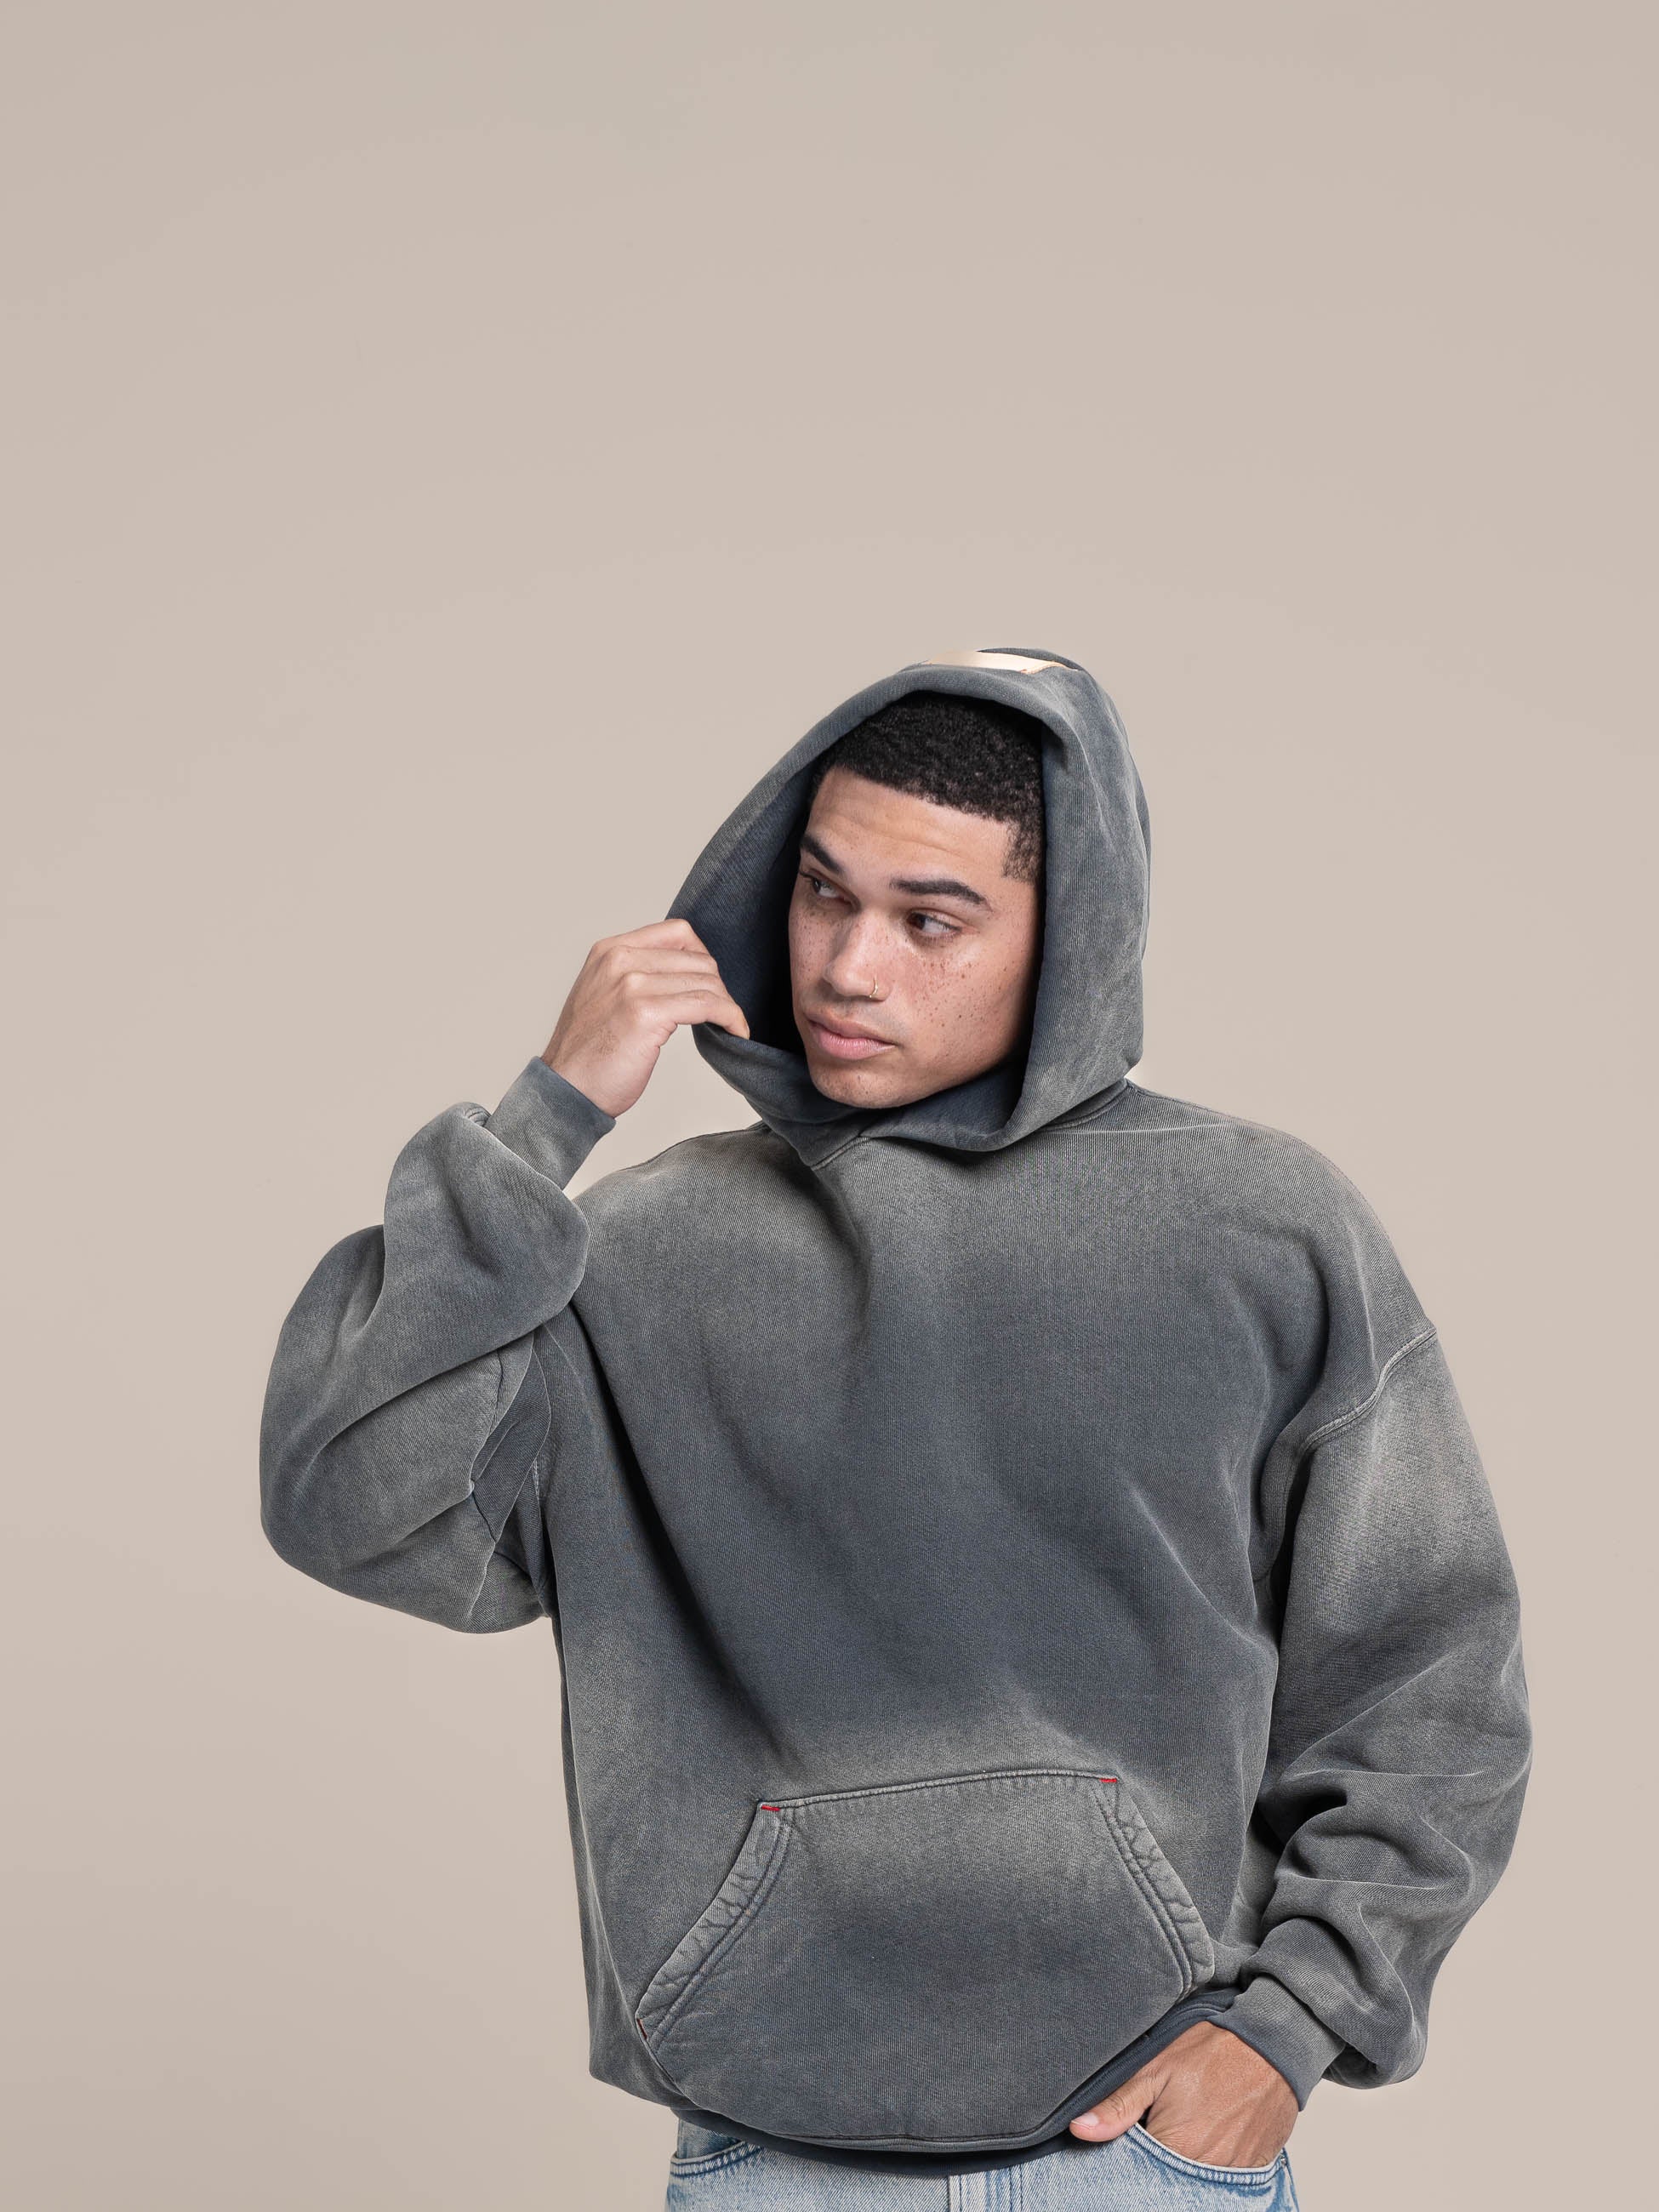 Publik Brand Single Layered Hoodie Anchor Gray Heavyweight Fleece, all made in USA